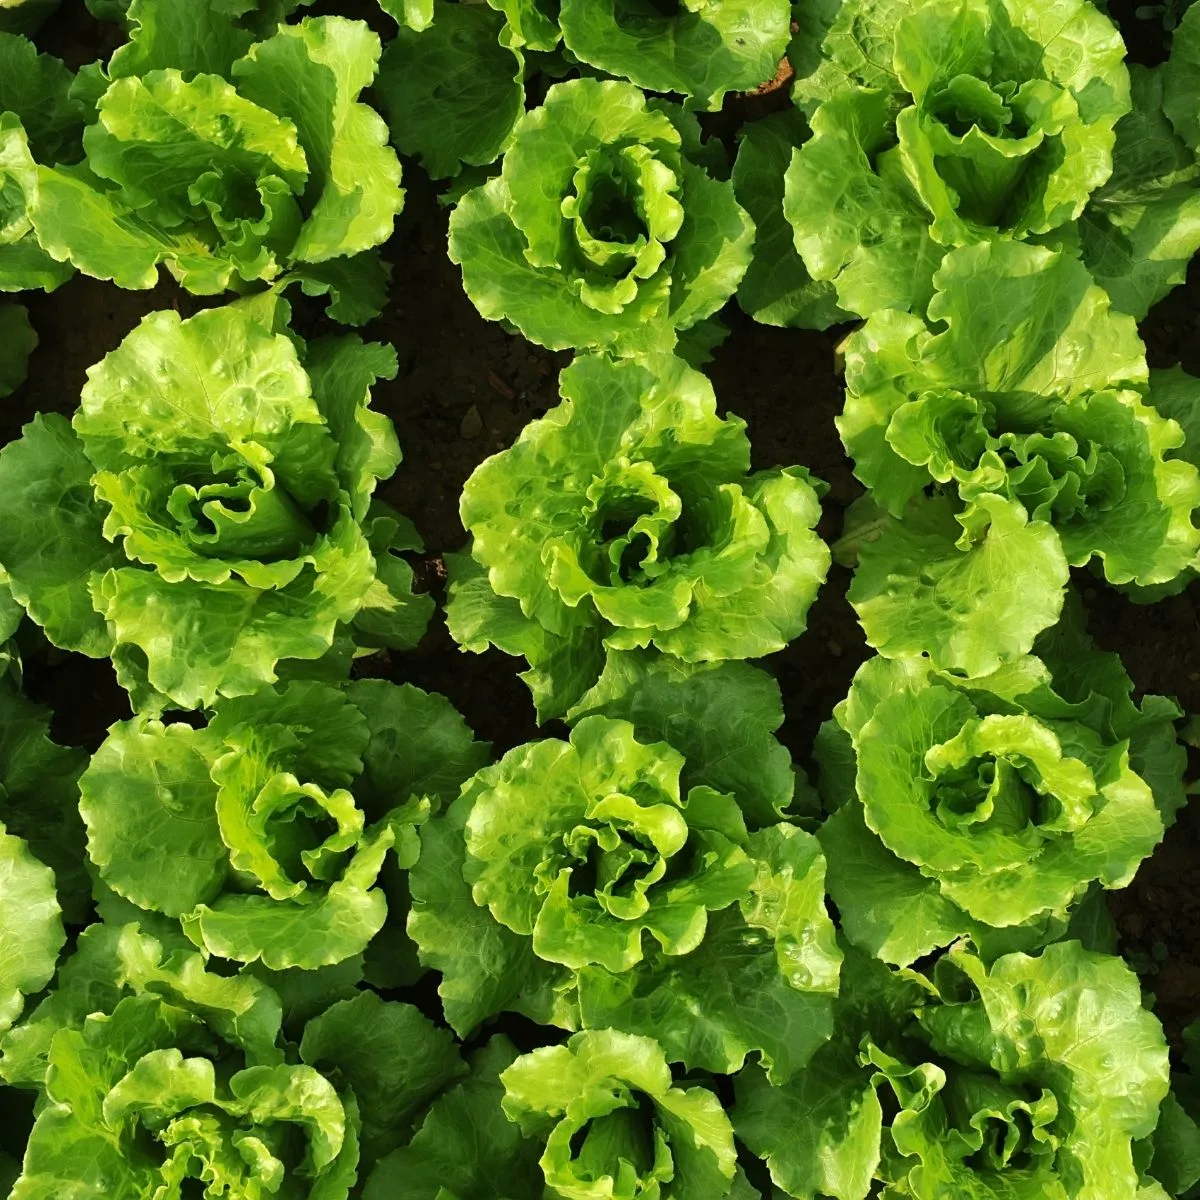 lettuce rows in the garden